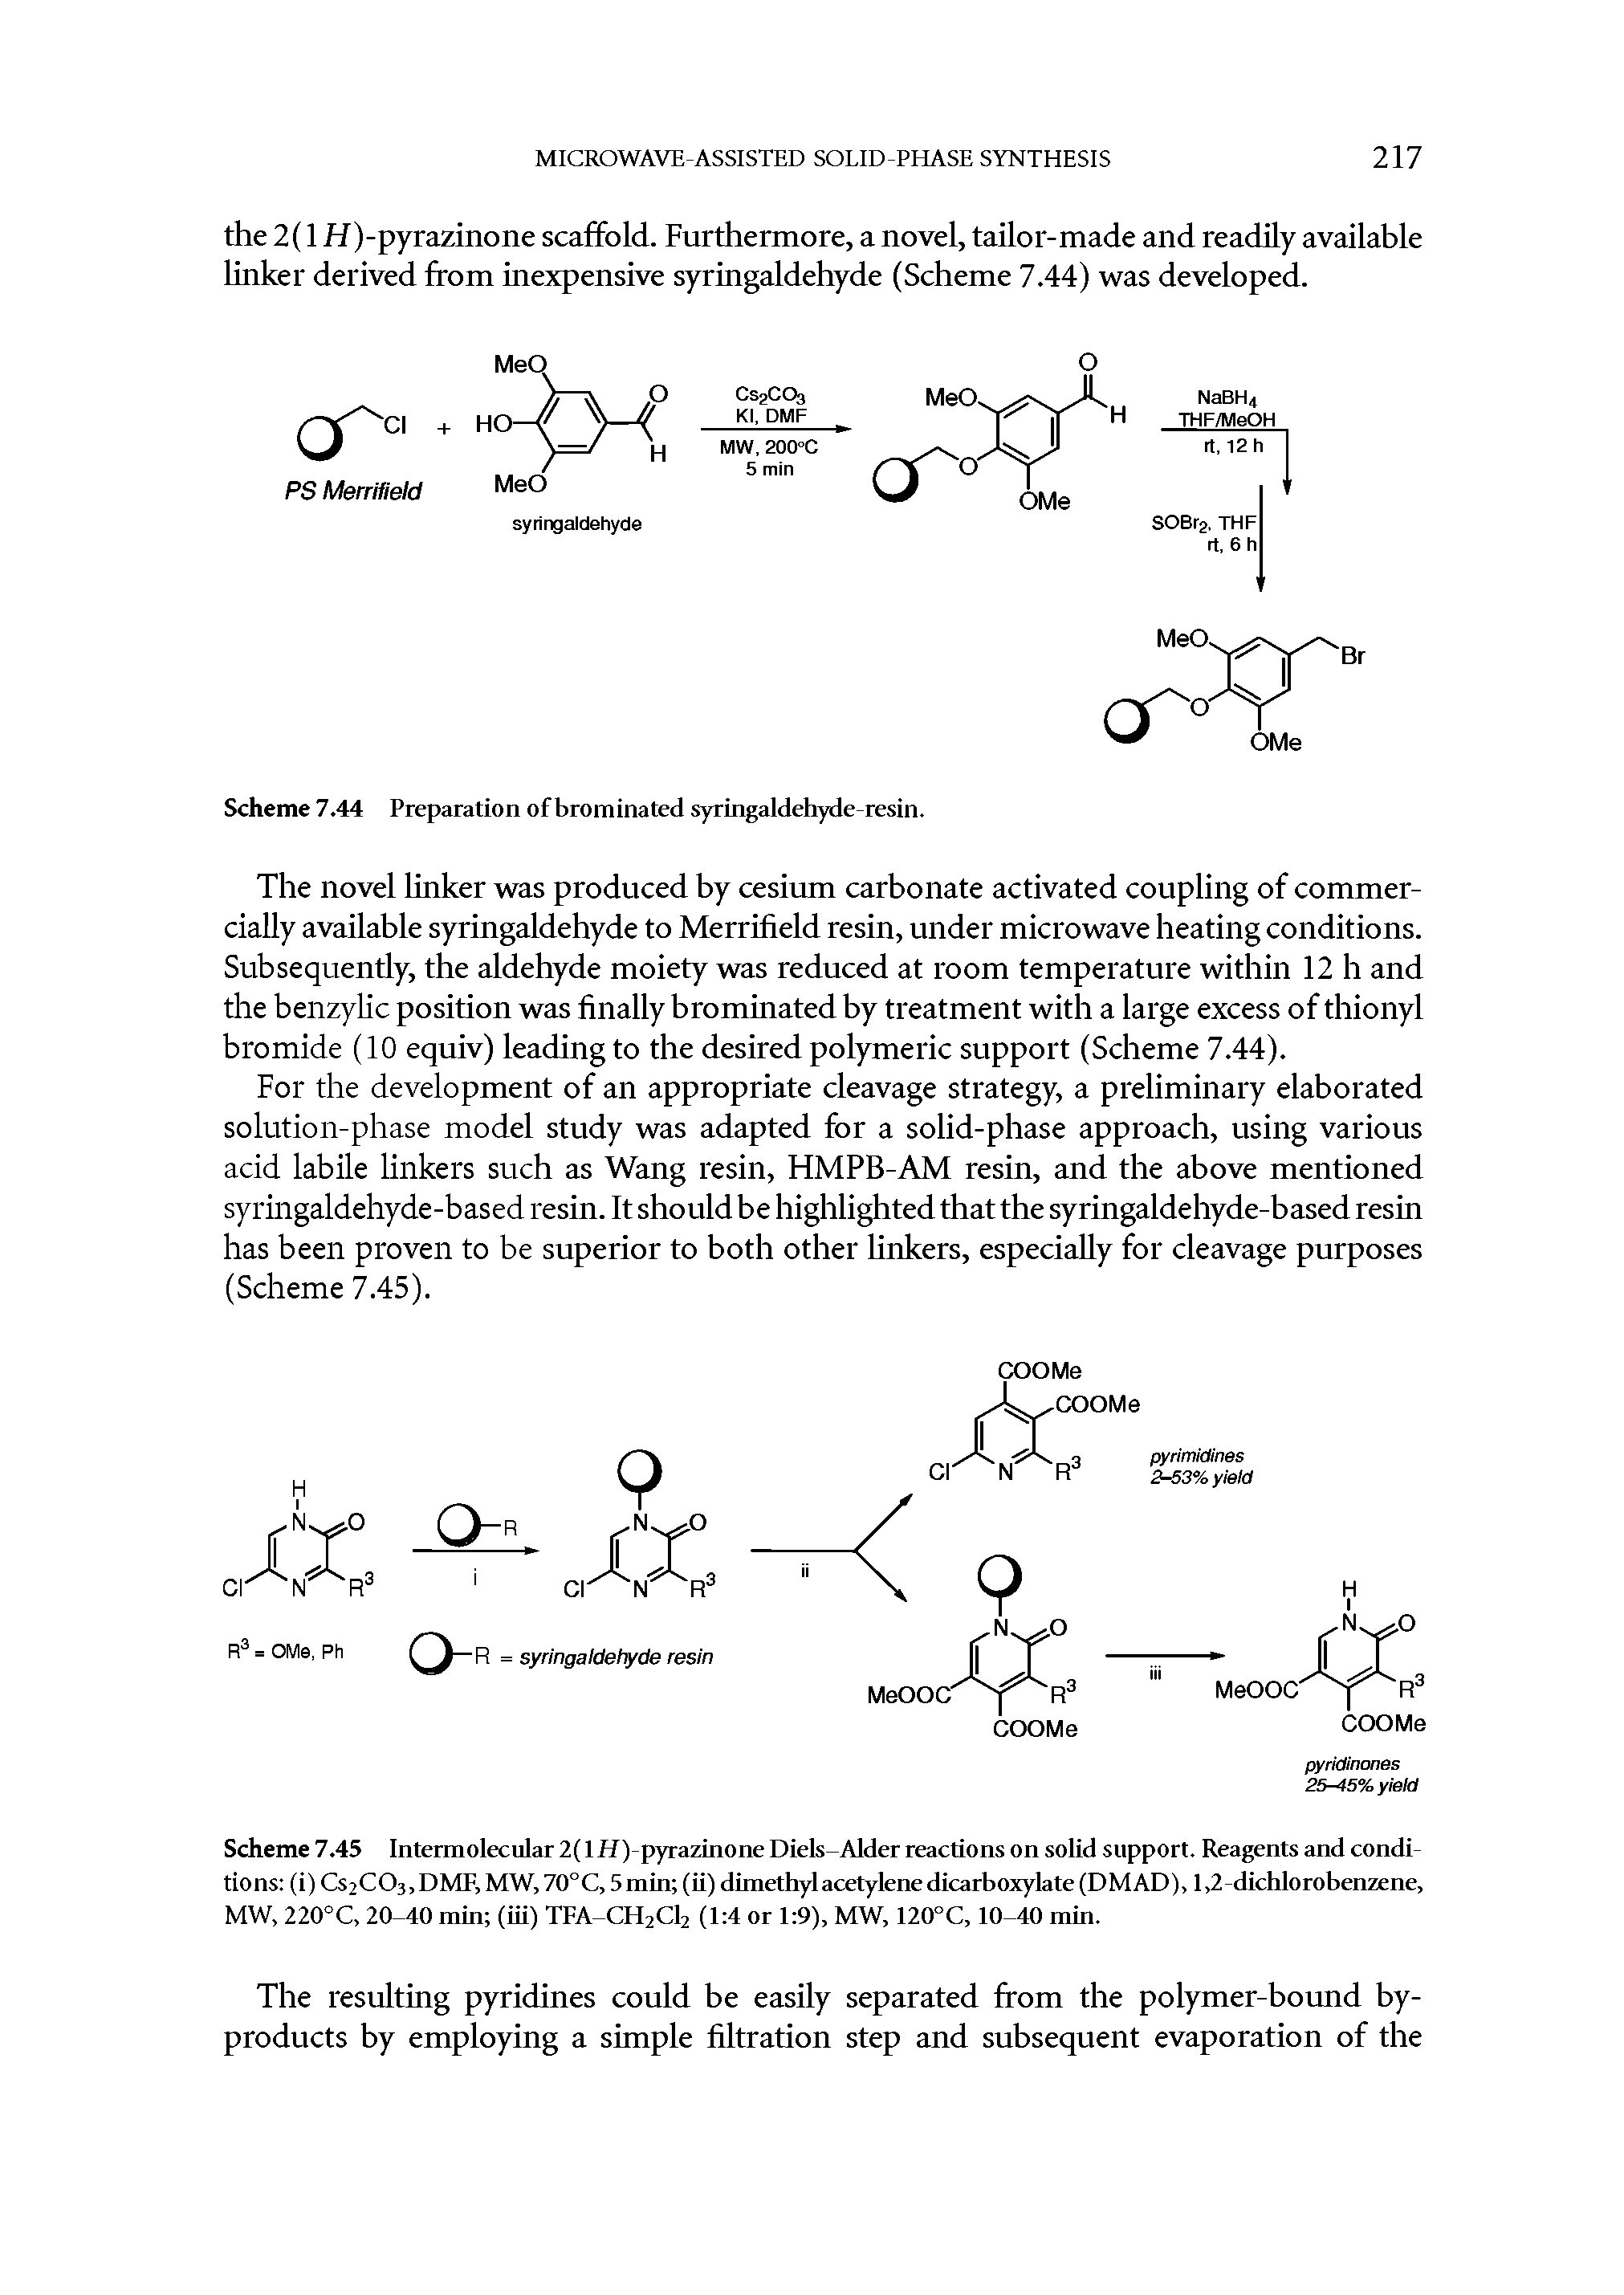 Scheme 7.45 Intermolecular 2(liT)-pyrazinone Diels-Alder reactions on solid support. Reagents and conditions (i) CS2CO3, DMF, MW, 70° C, 5 min (ii) dimethyl acetylene dicarboxylate (DMAD), 1,2-dichlorobenzene, MW, 220°C, 20-40 min (iii) TFA-CH2C12 (1 4 or 1 9), MW, 120°C, 10-40 min.